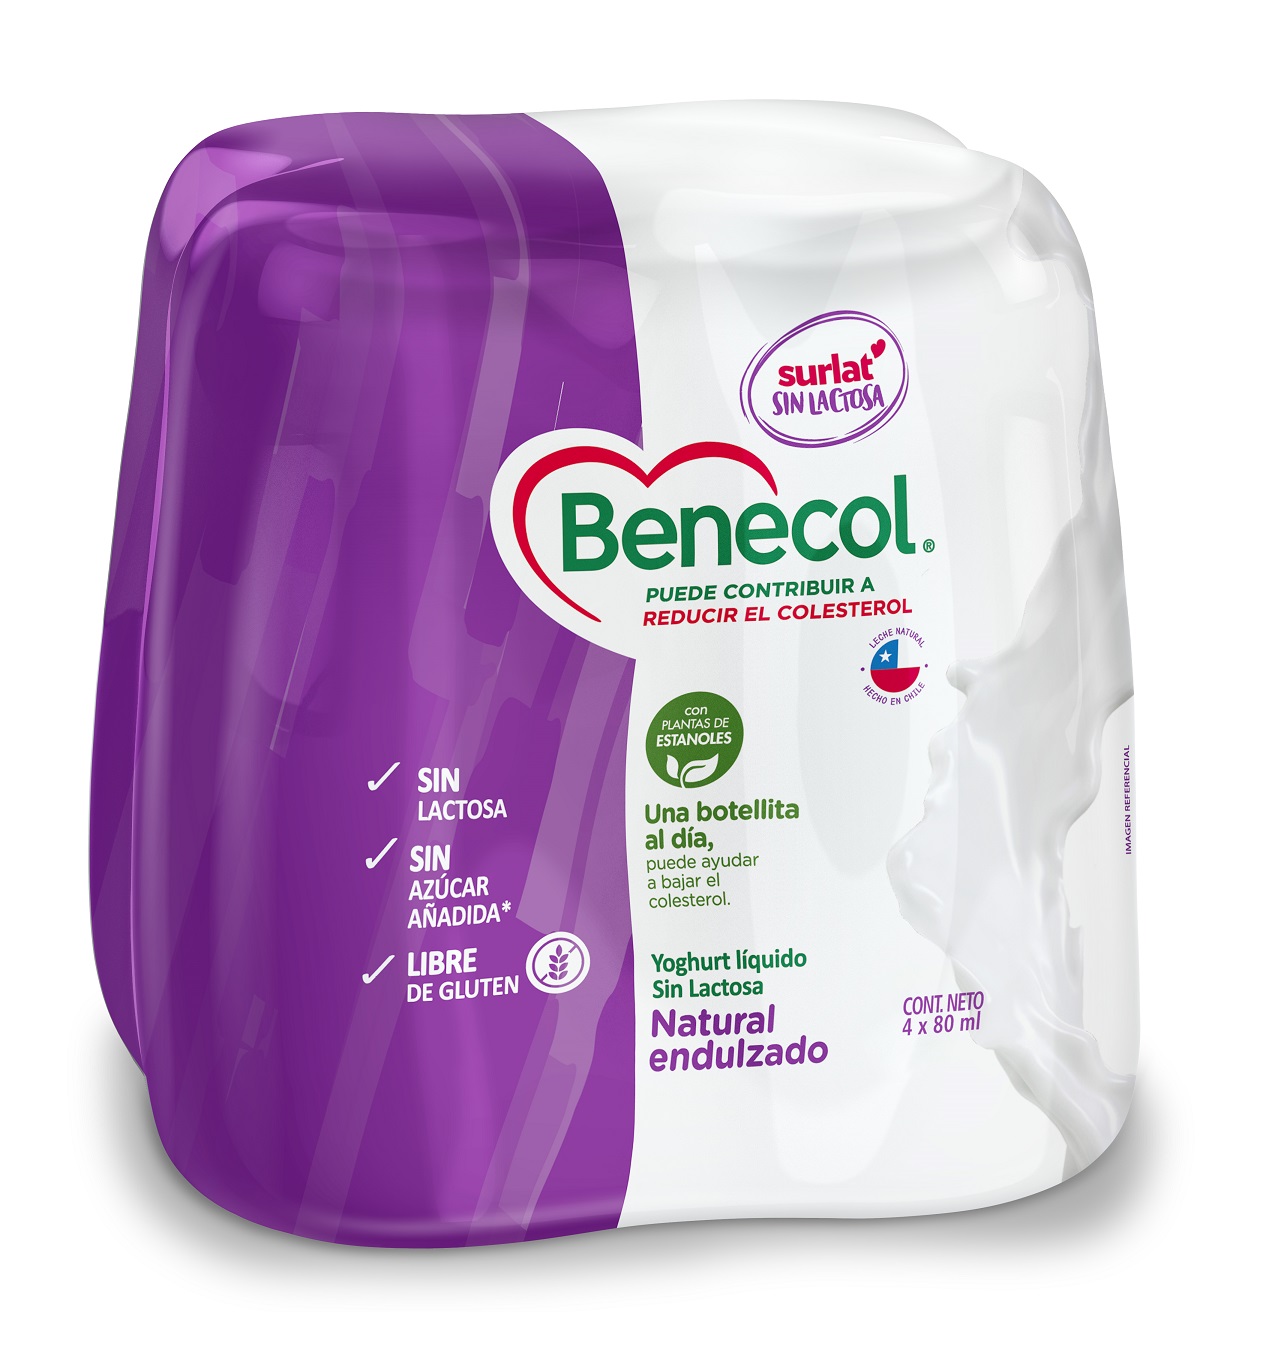 MINISHOT BENECOL NATURAL SIN LACTOSA 4 X 80 ml